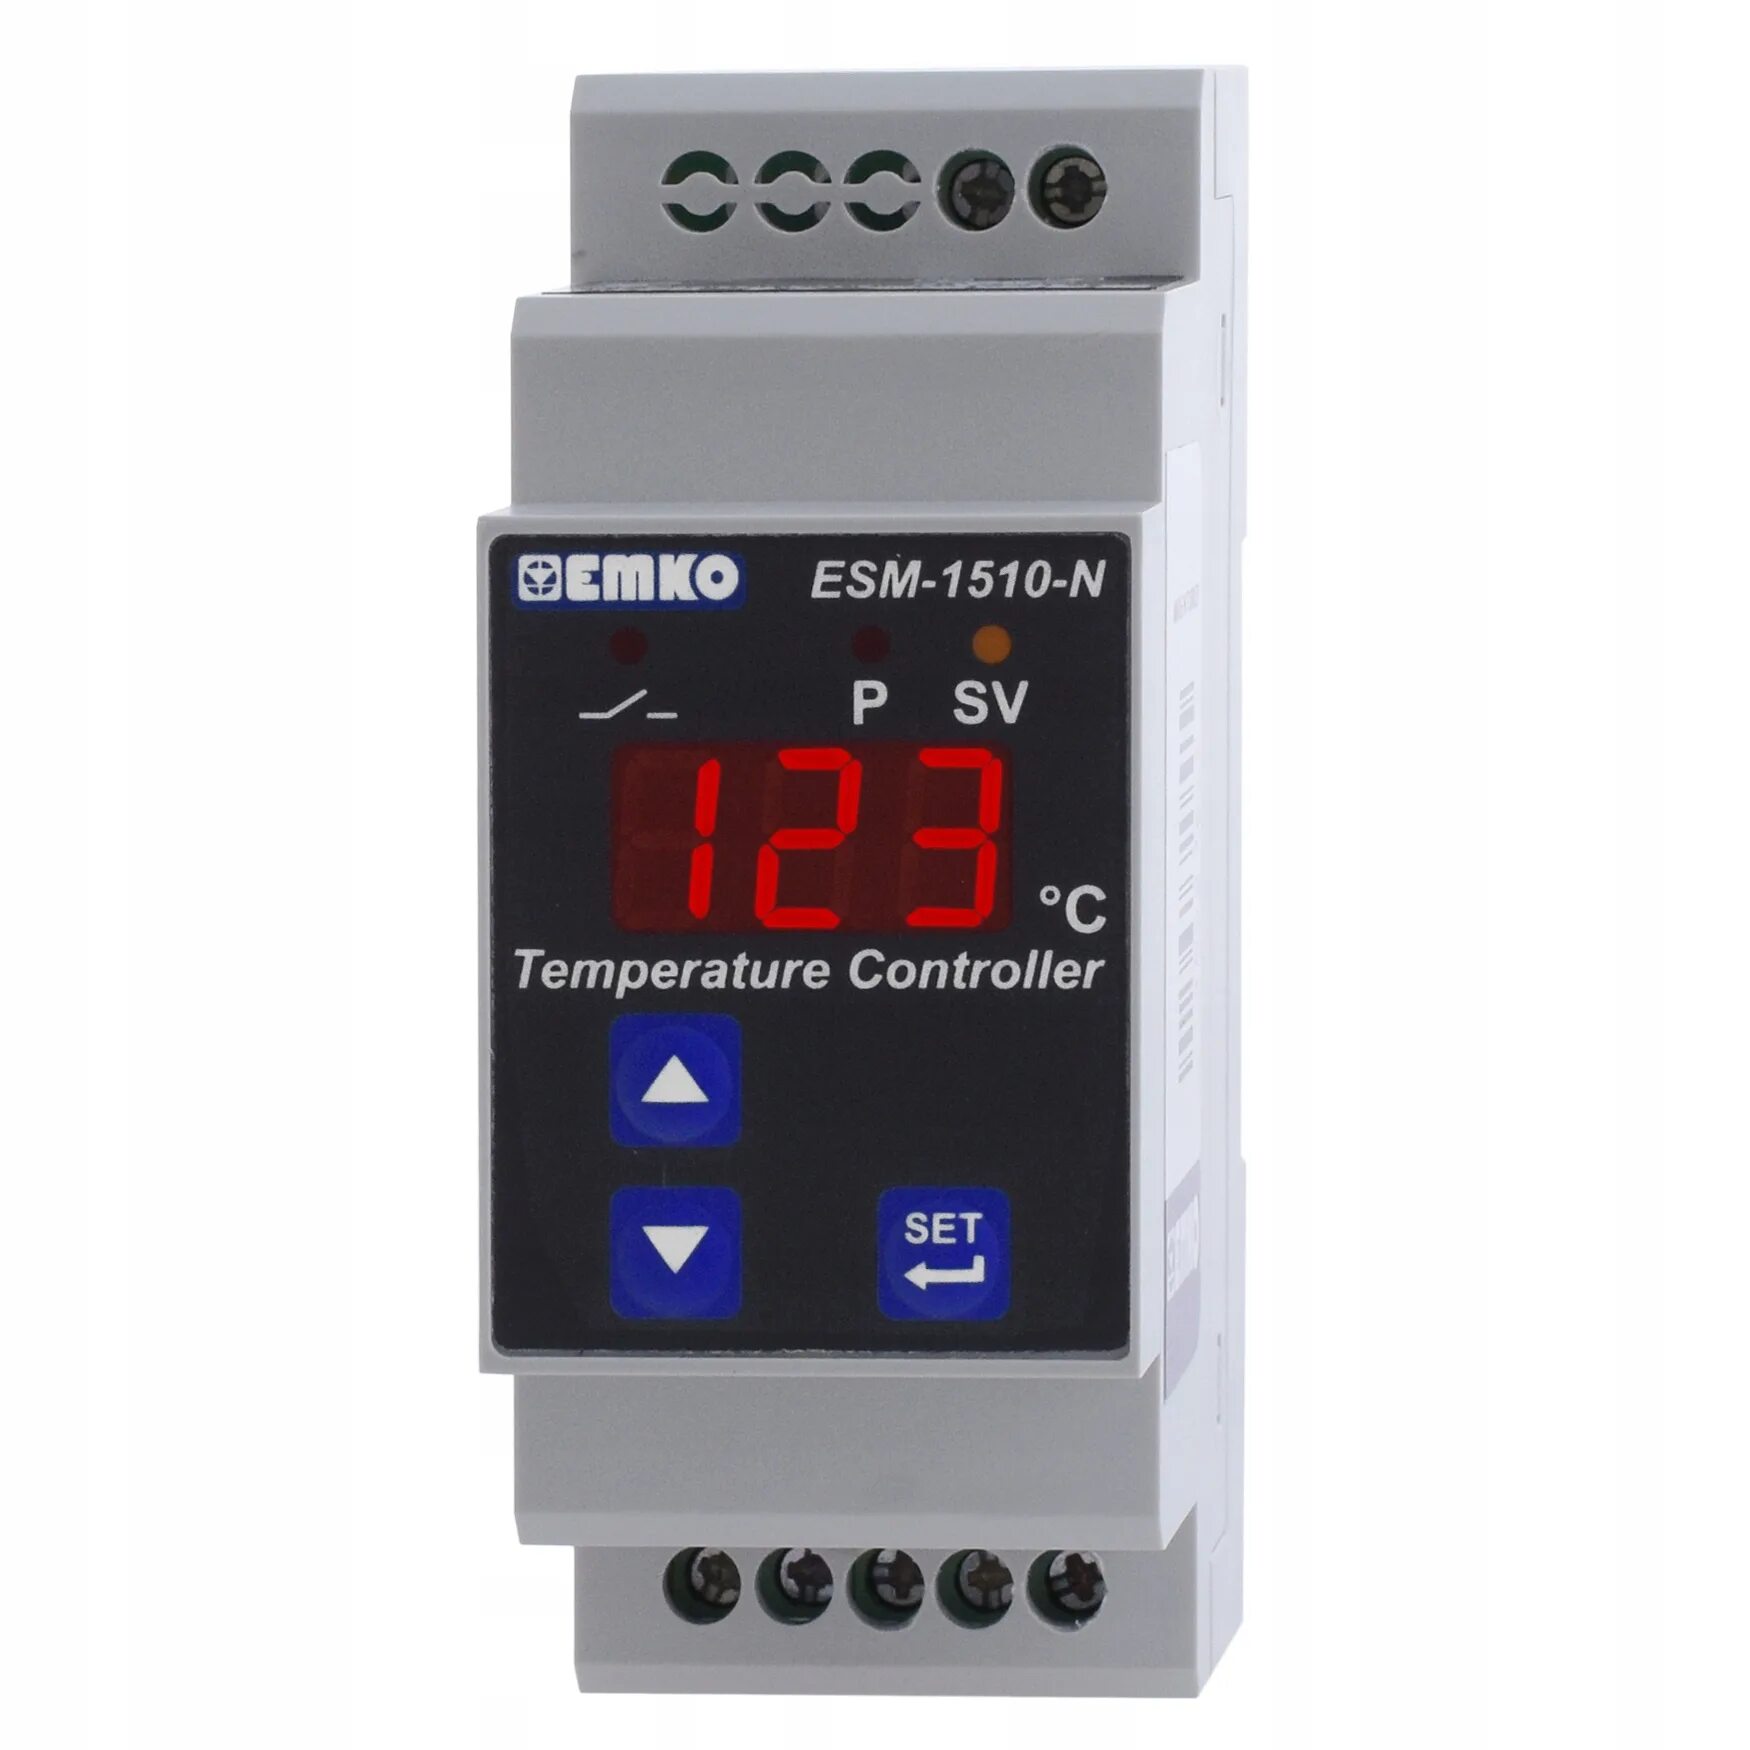 Термостат на din рейку. Реле контроля температуры pt100. Emko ESM 1510 N. ESM 1510 терморегулятор.